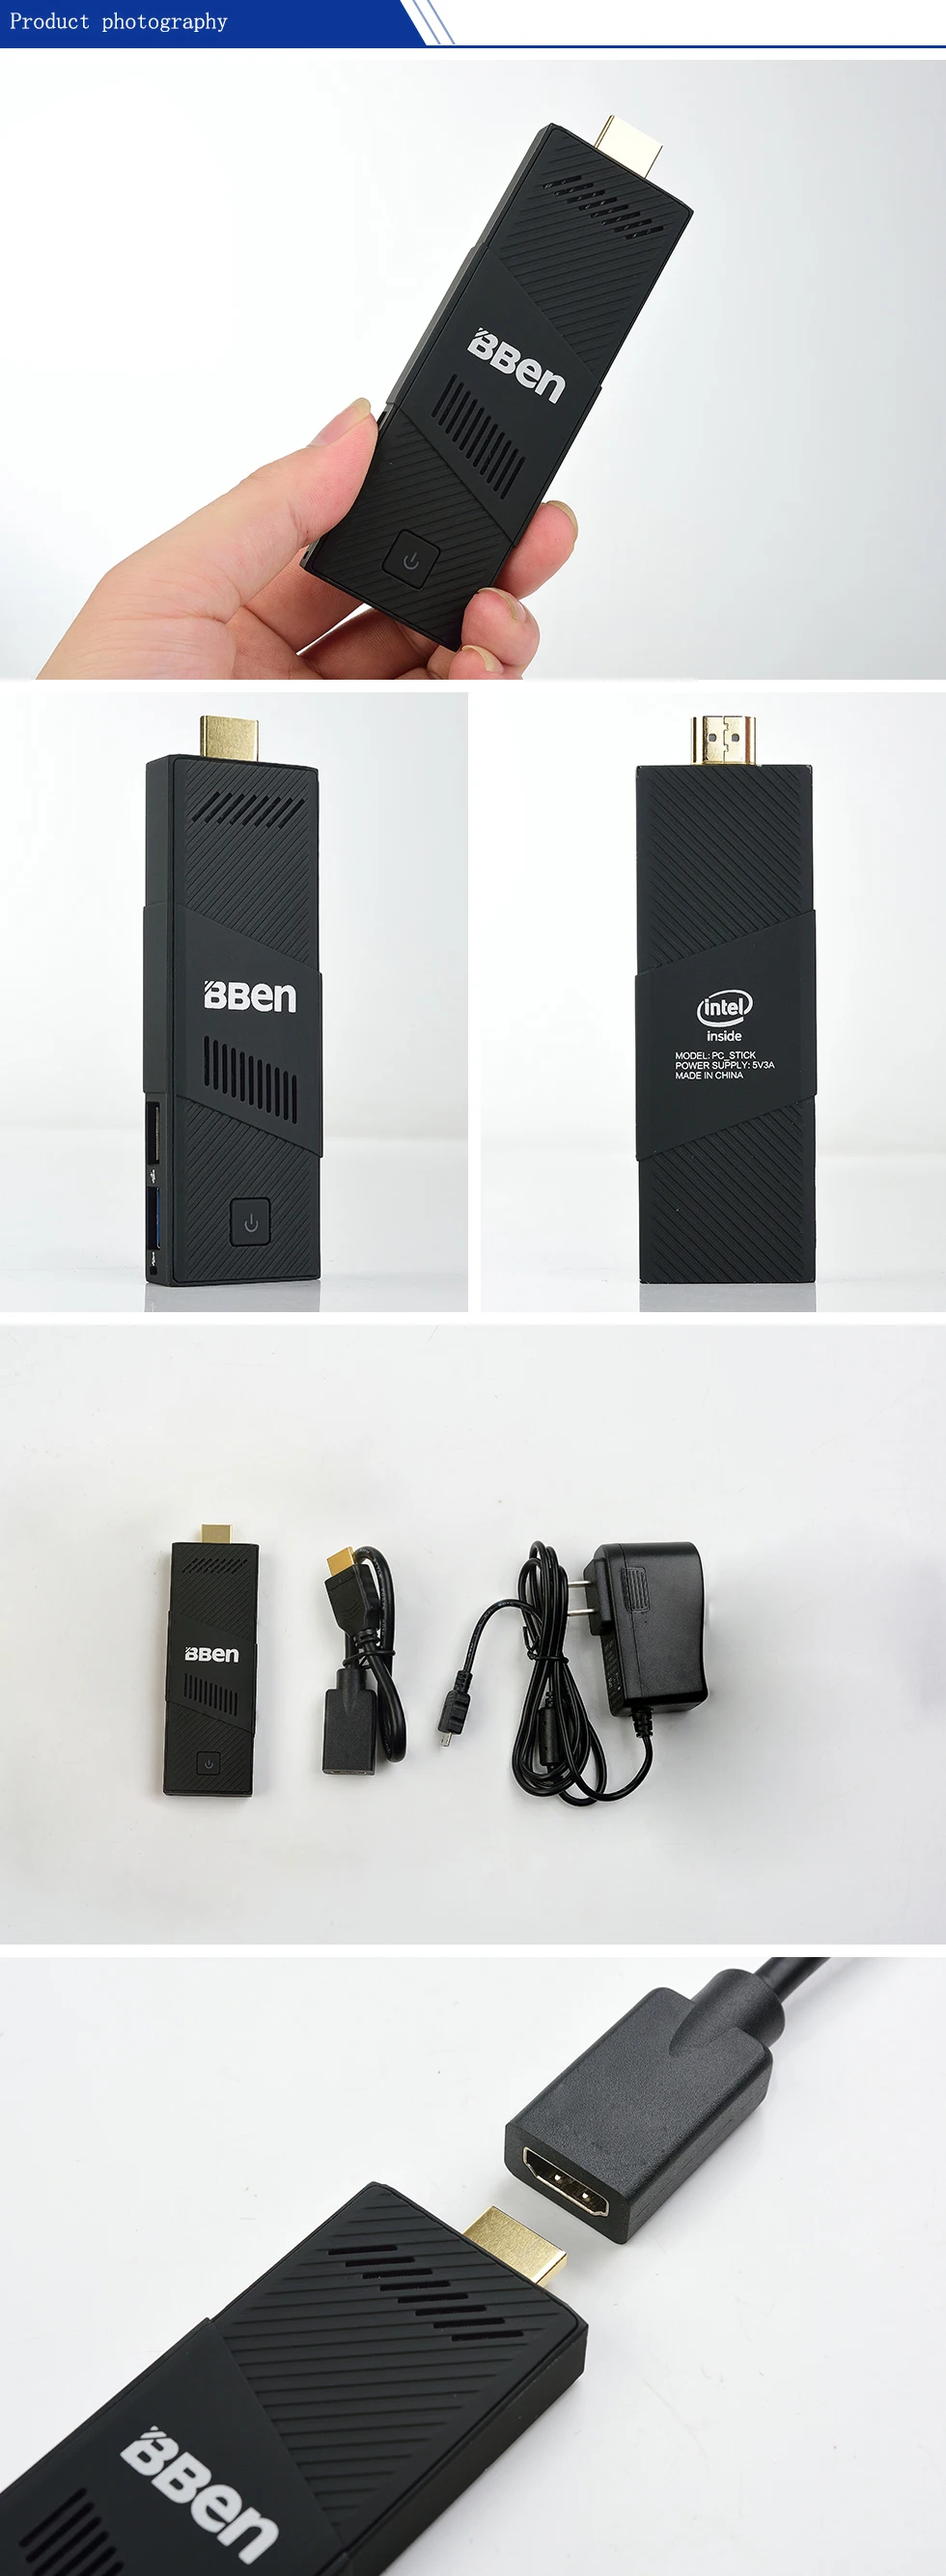 Bben MN9 вентилятор intel мини ПК windows10, 4 Гб ram+ 64 Гб emmc Мини компьютер pc stick медиаплеер USB3.0 wifi с США/ЕС вилка